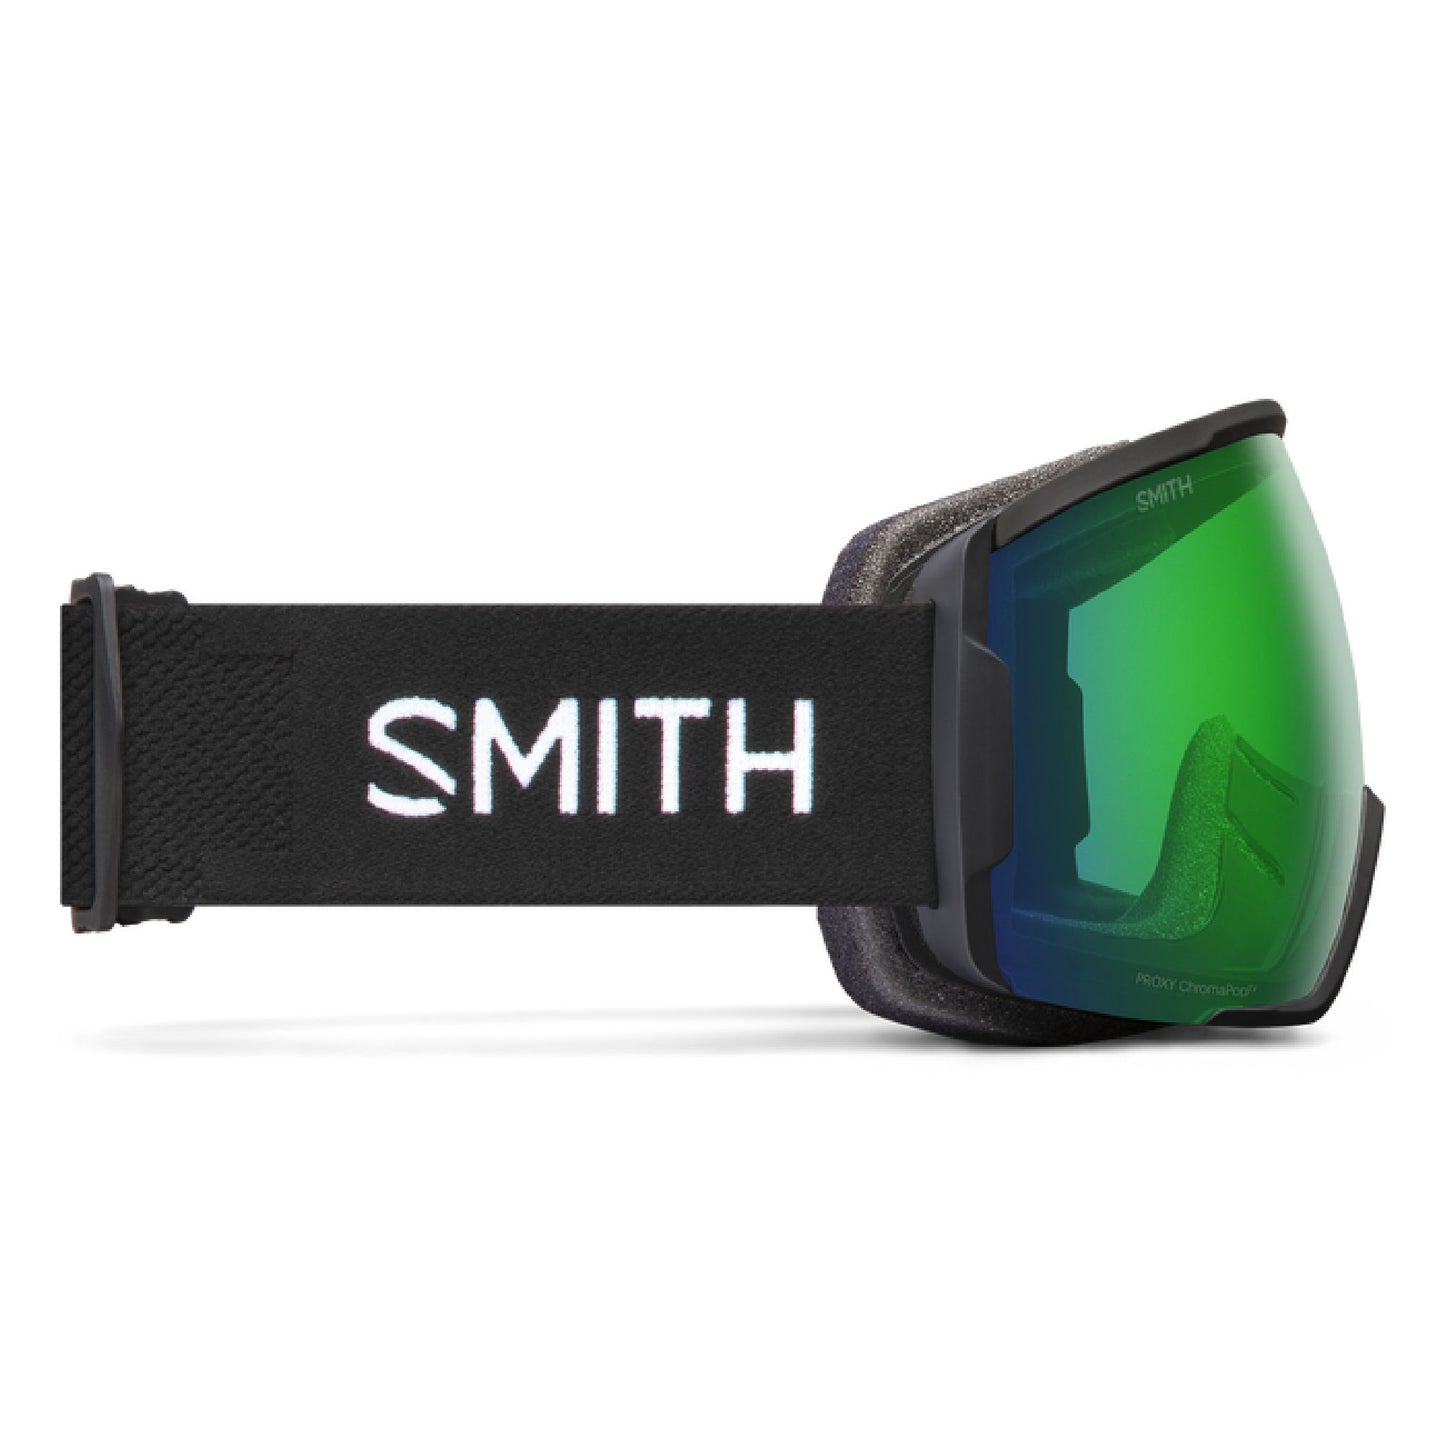 Smith Proxy Goggles - Ski